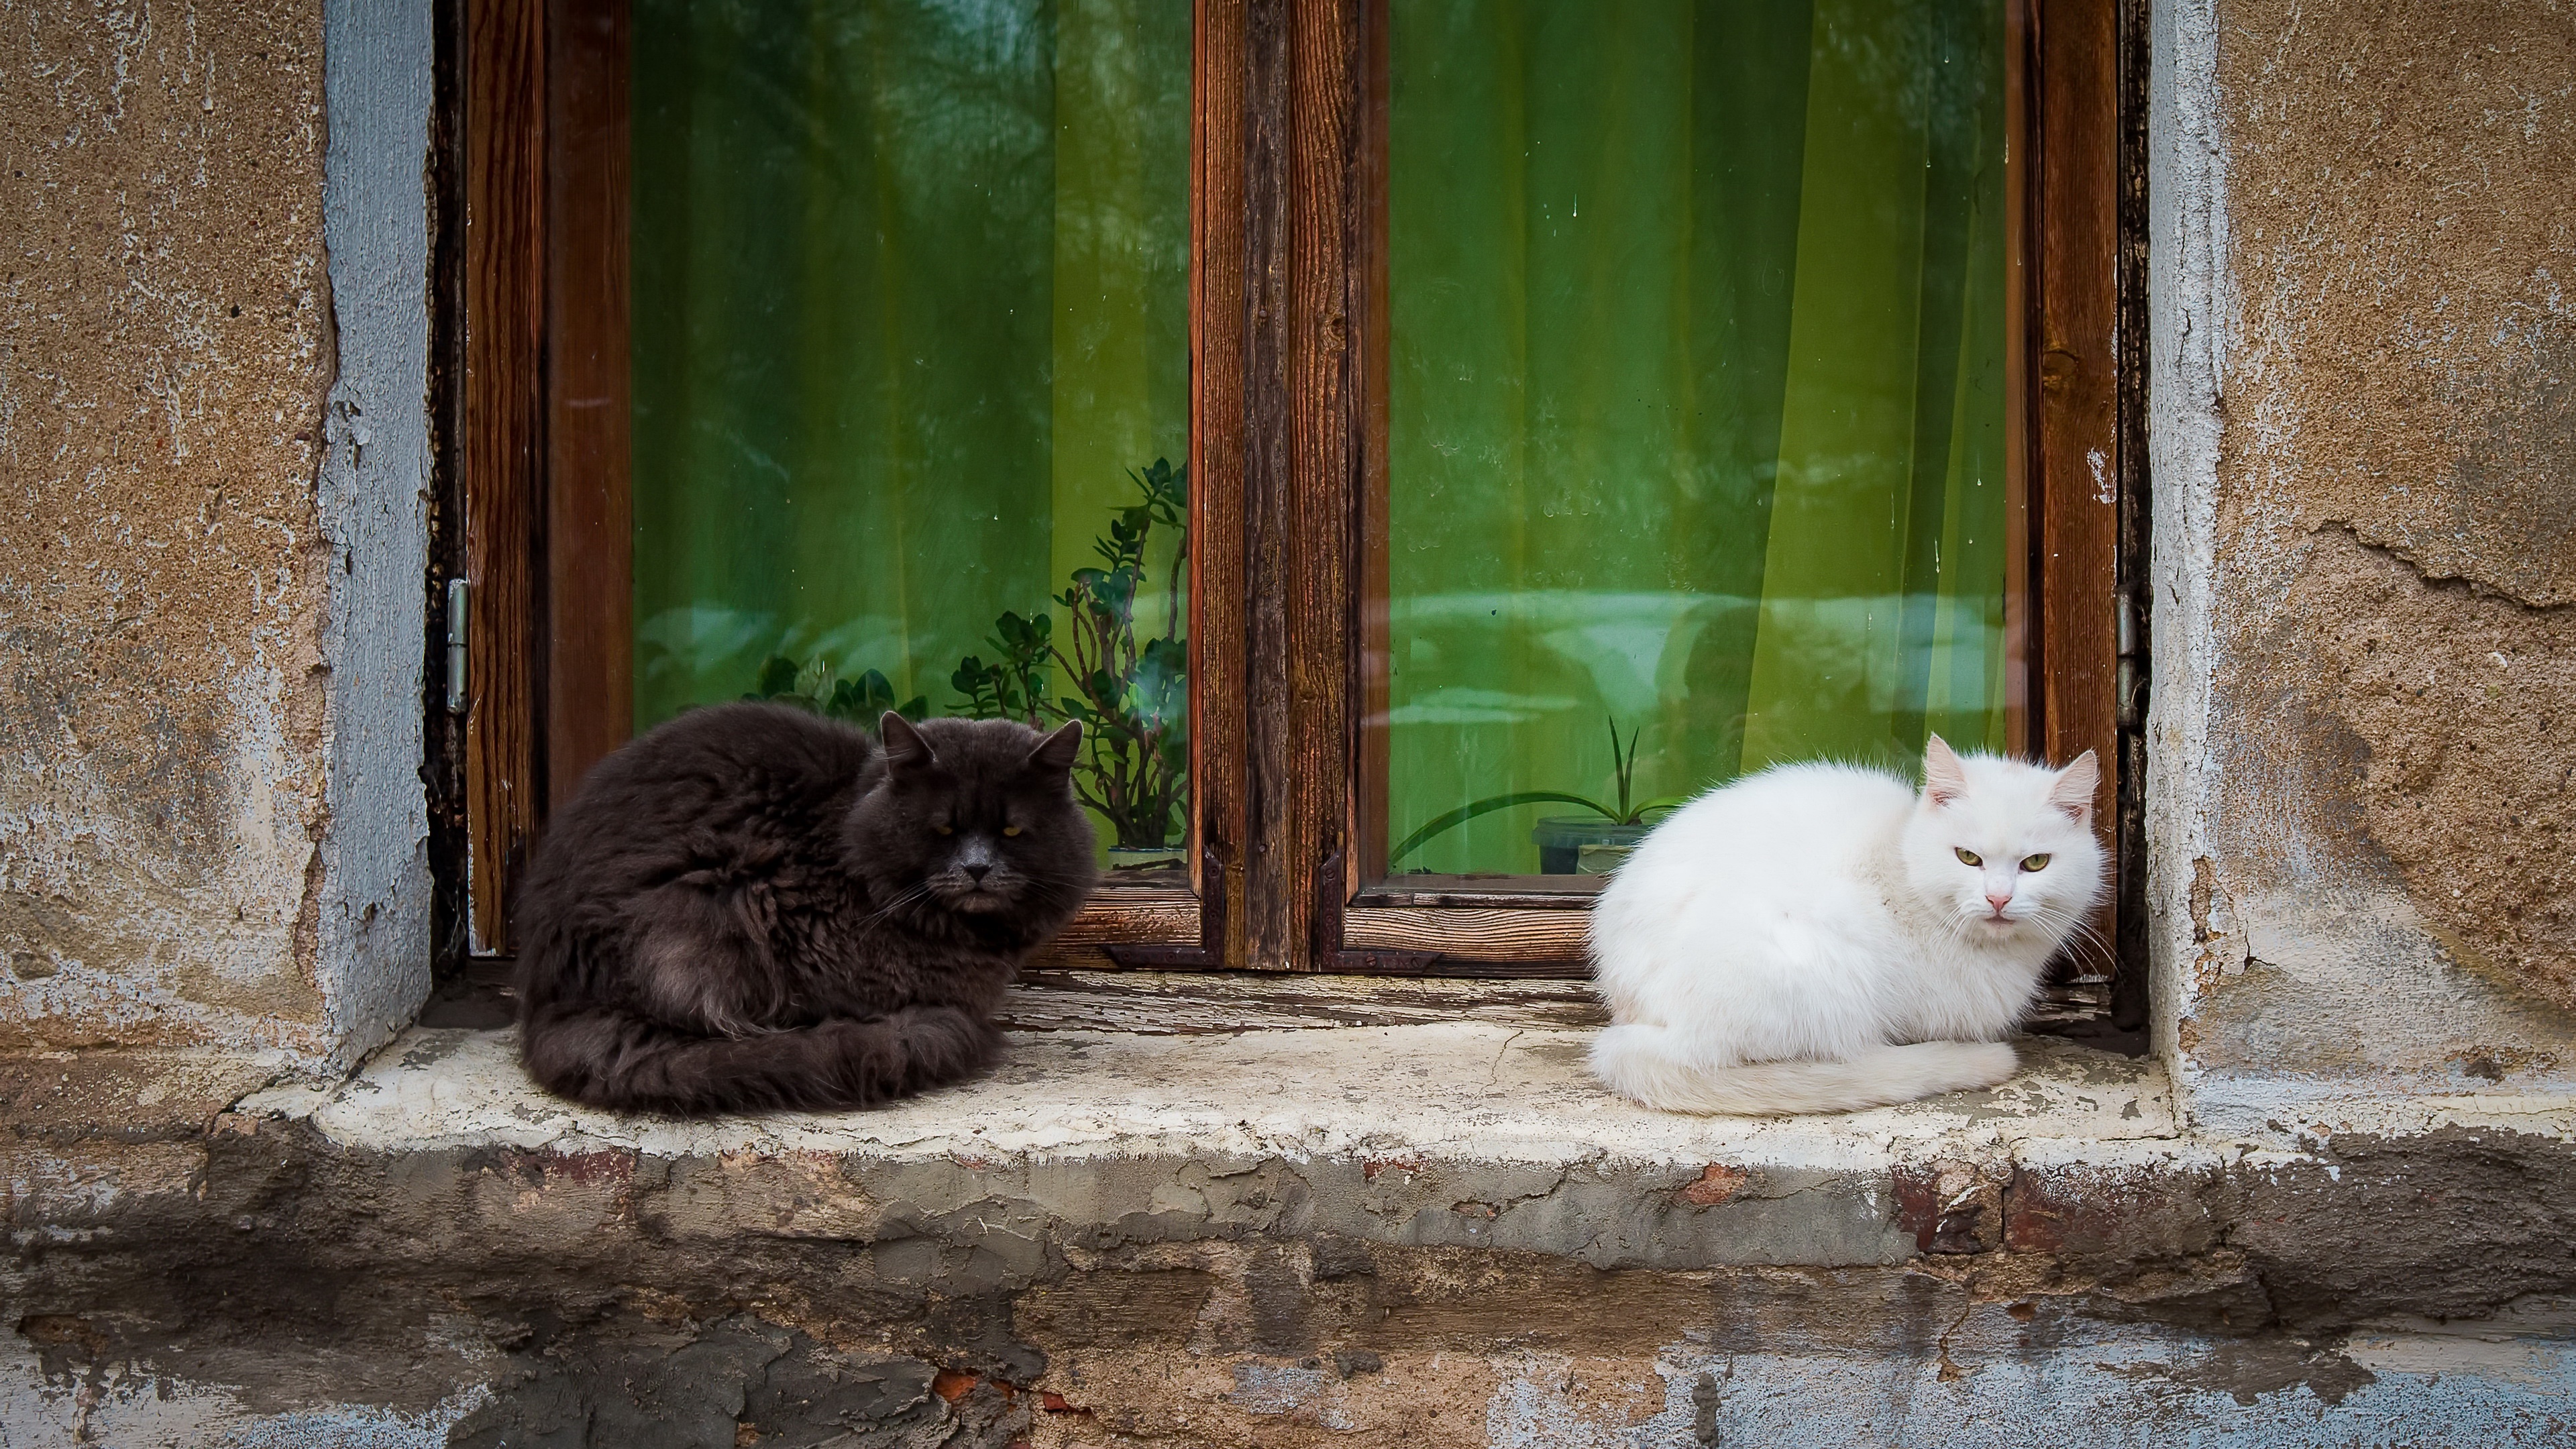 General 3840x2160 cats animals mammals window outdoors feline